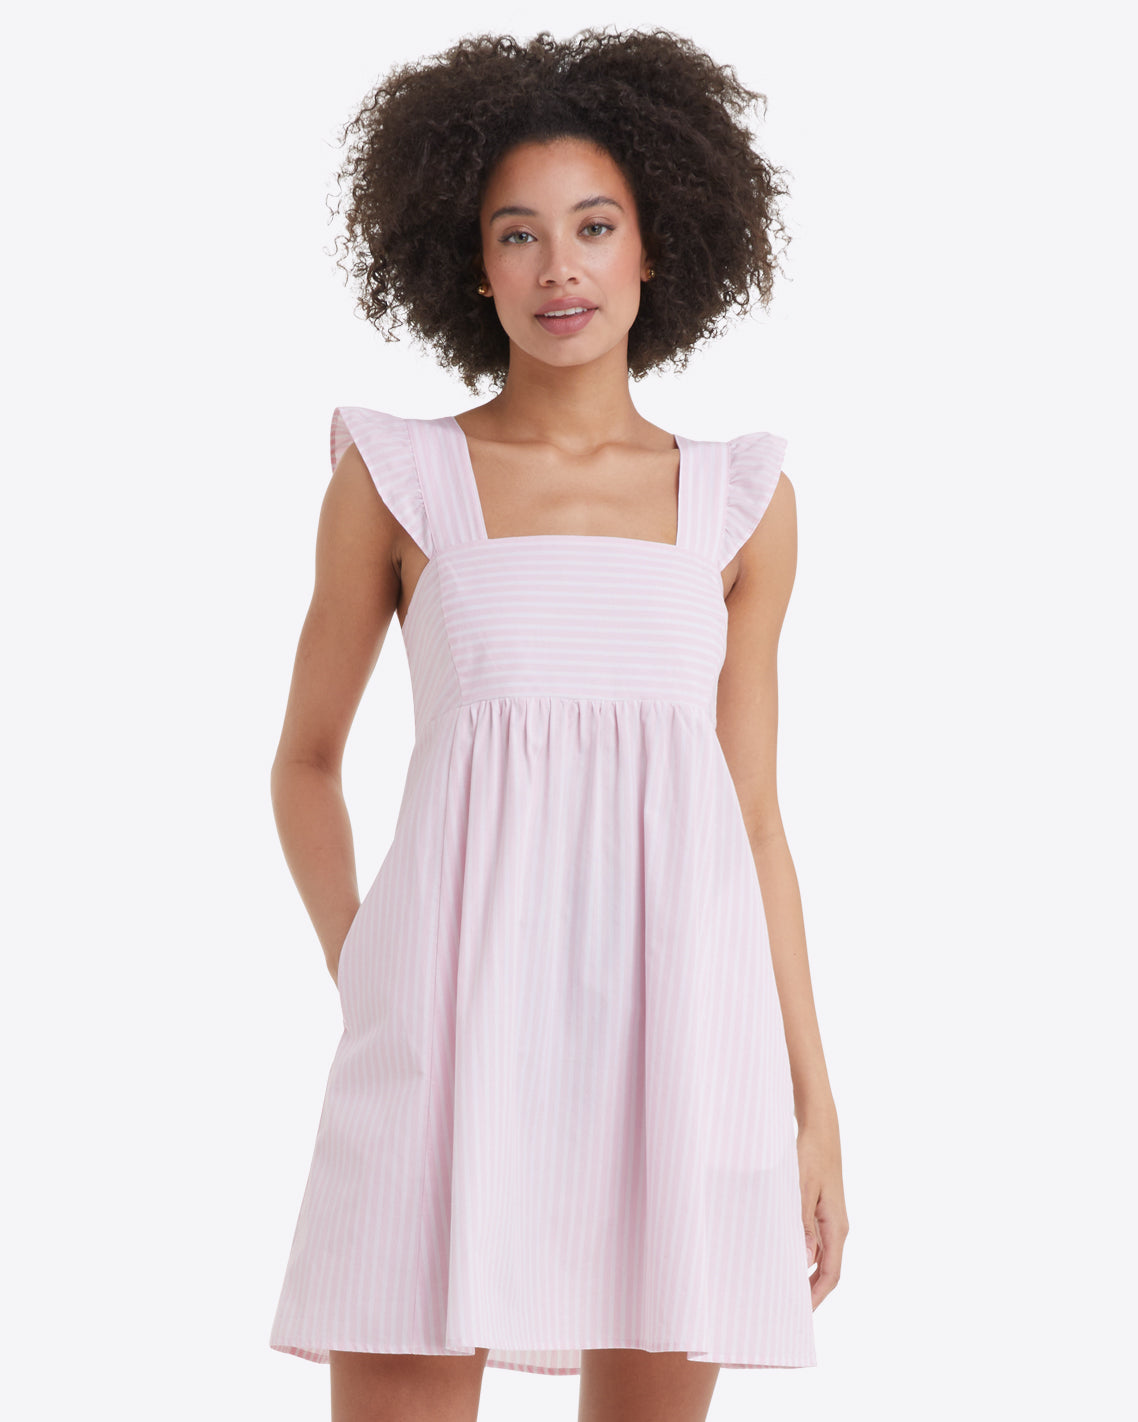 Maddie Babydoll Dress in Pink Stripe – Draper James